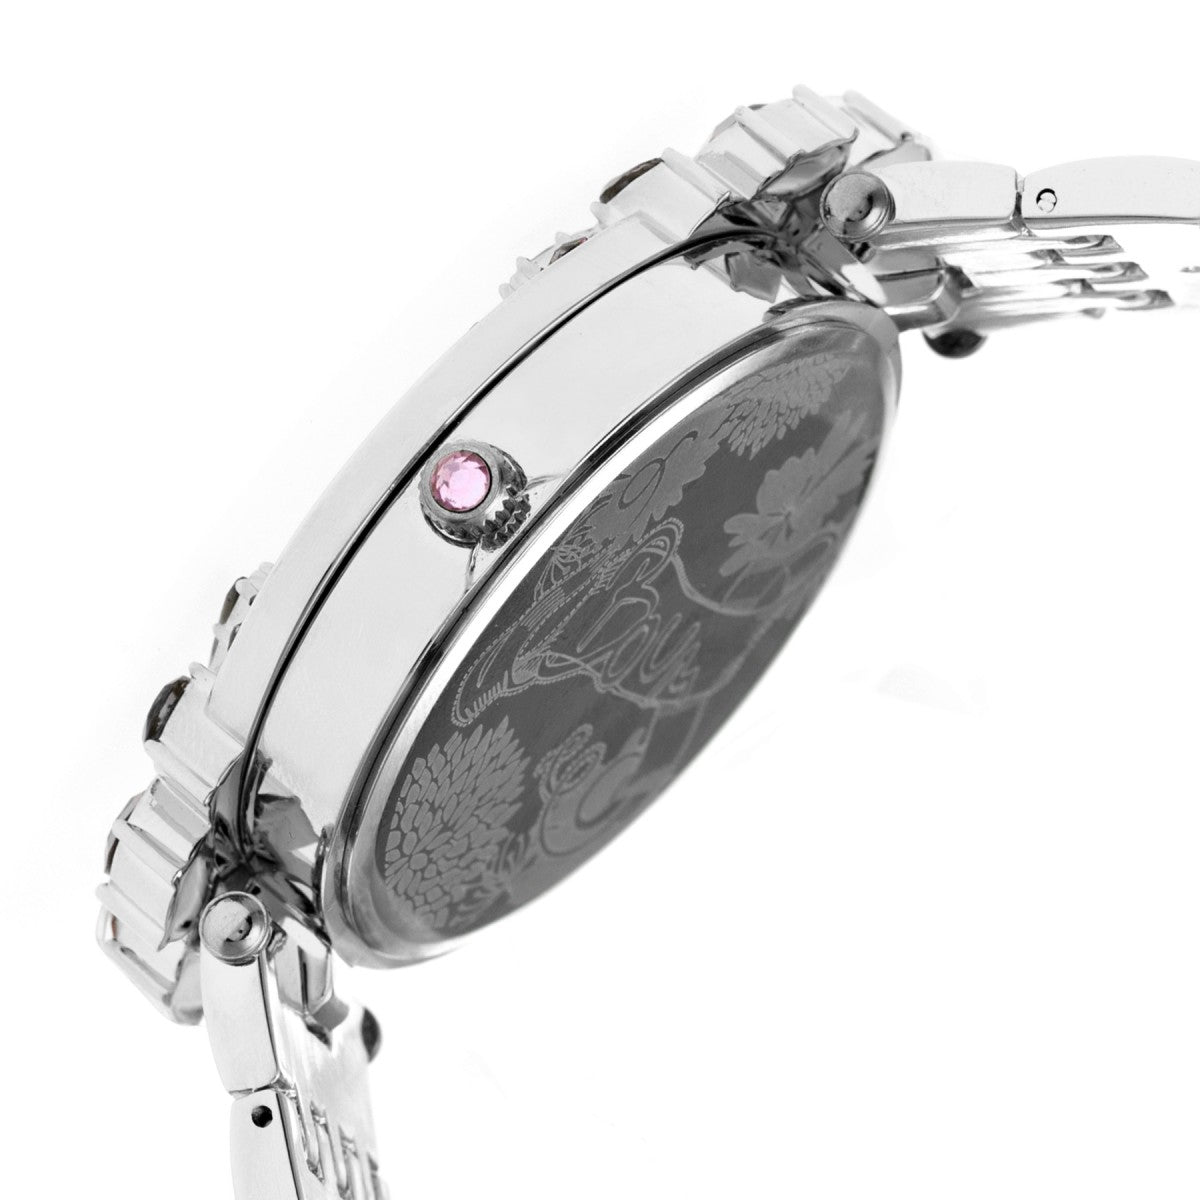 Boum Precieux Crystal-Surround Bezel Bracelet Watch - Silver - BOUBM4201